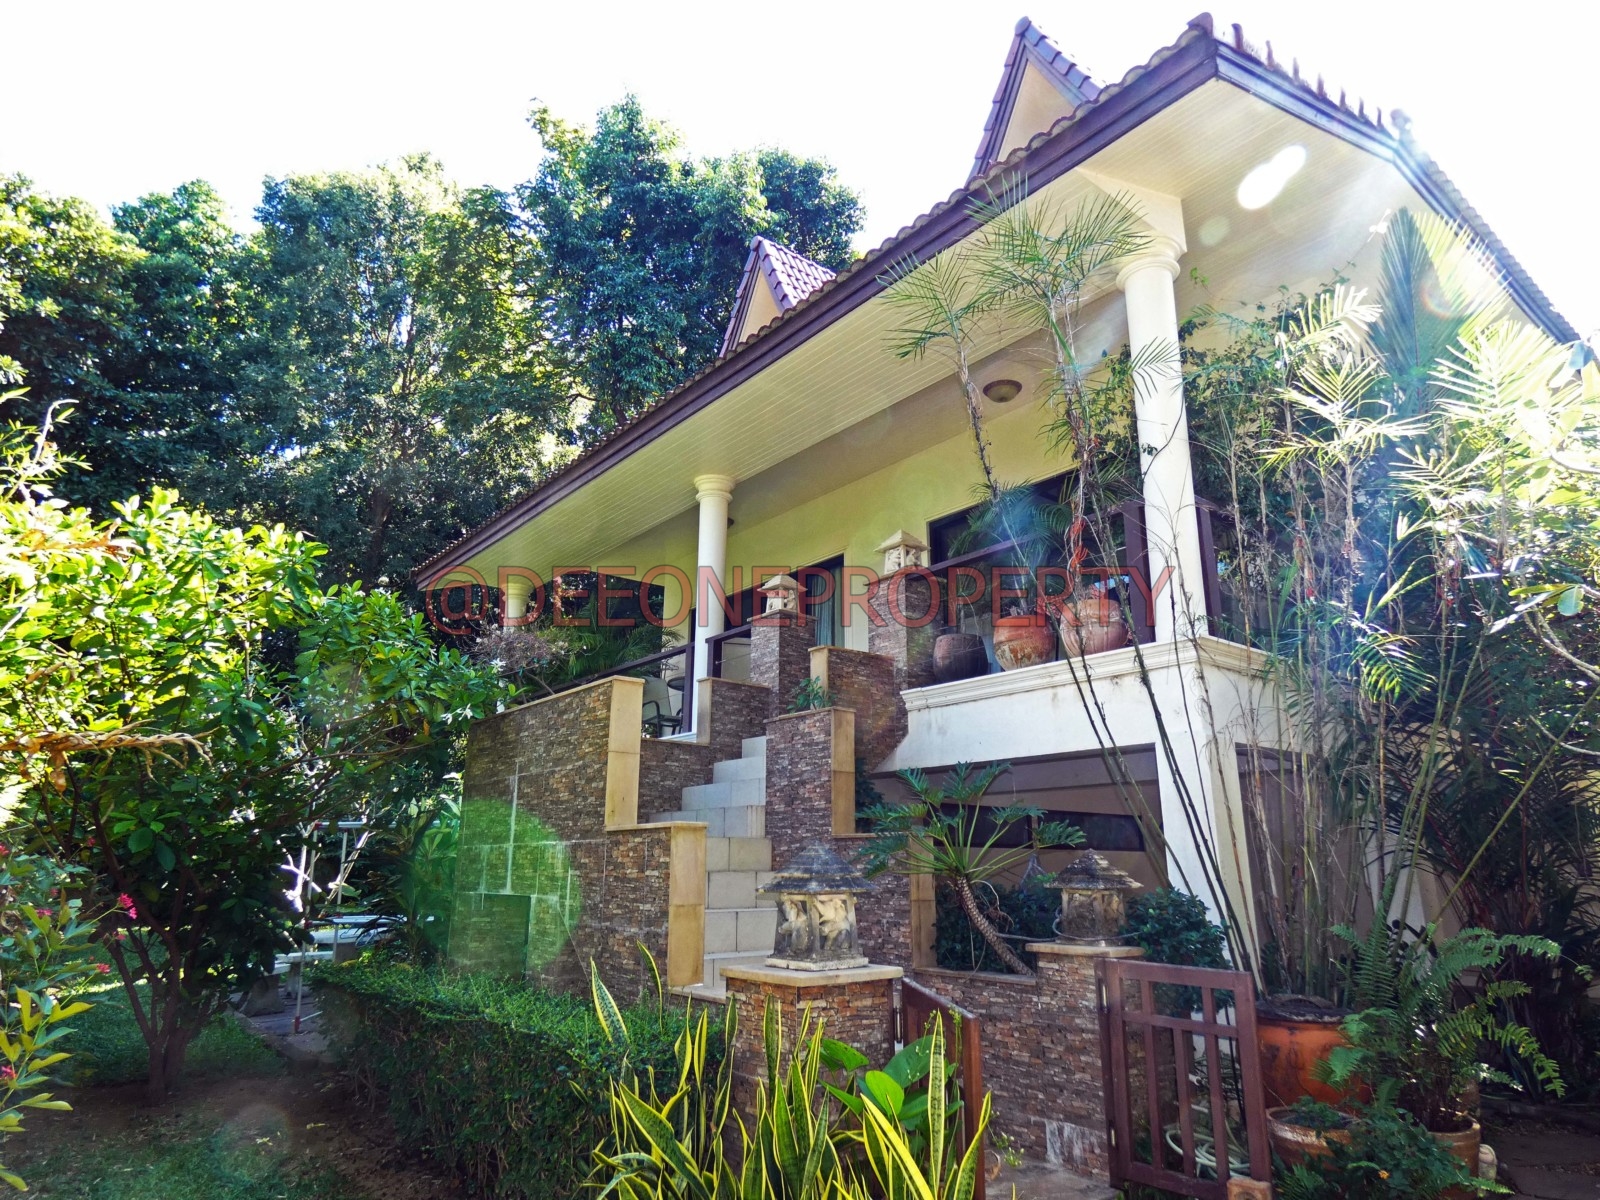 3 Bedrooms Garden Villa for Sale – North East Coast, Koh Chang